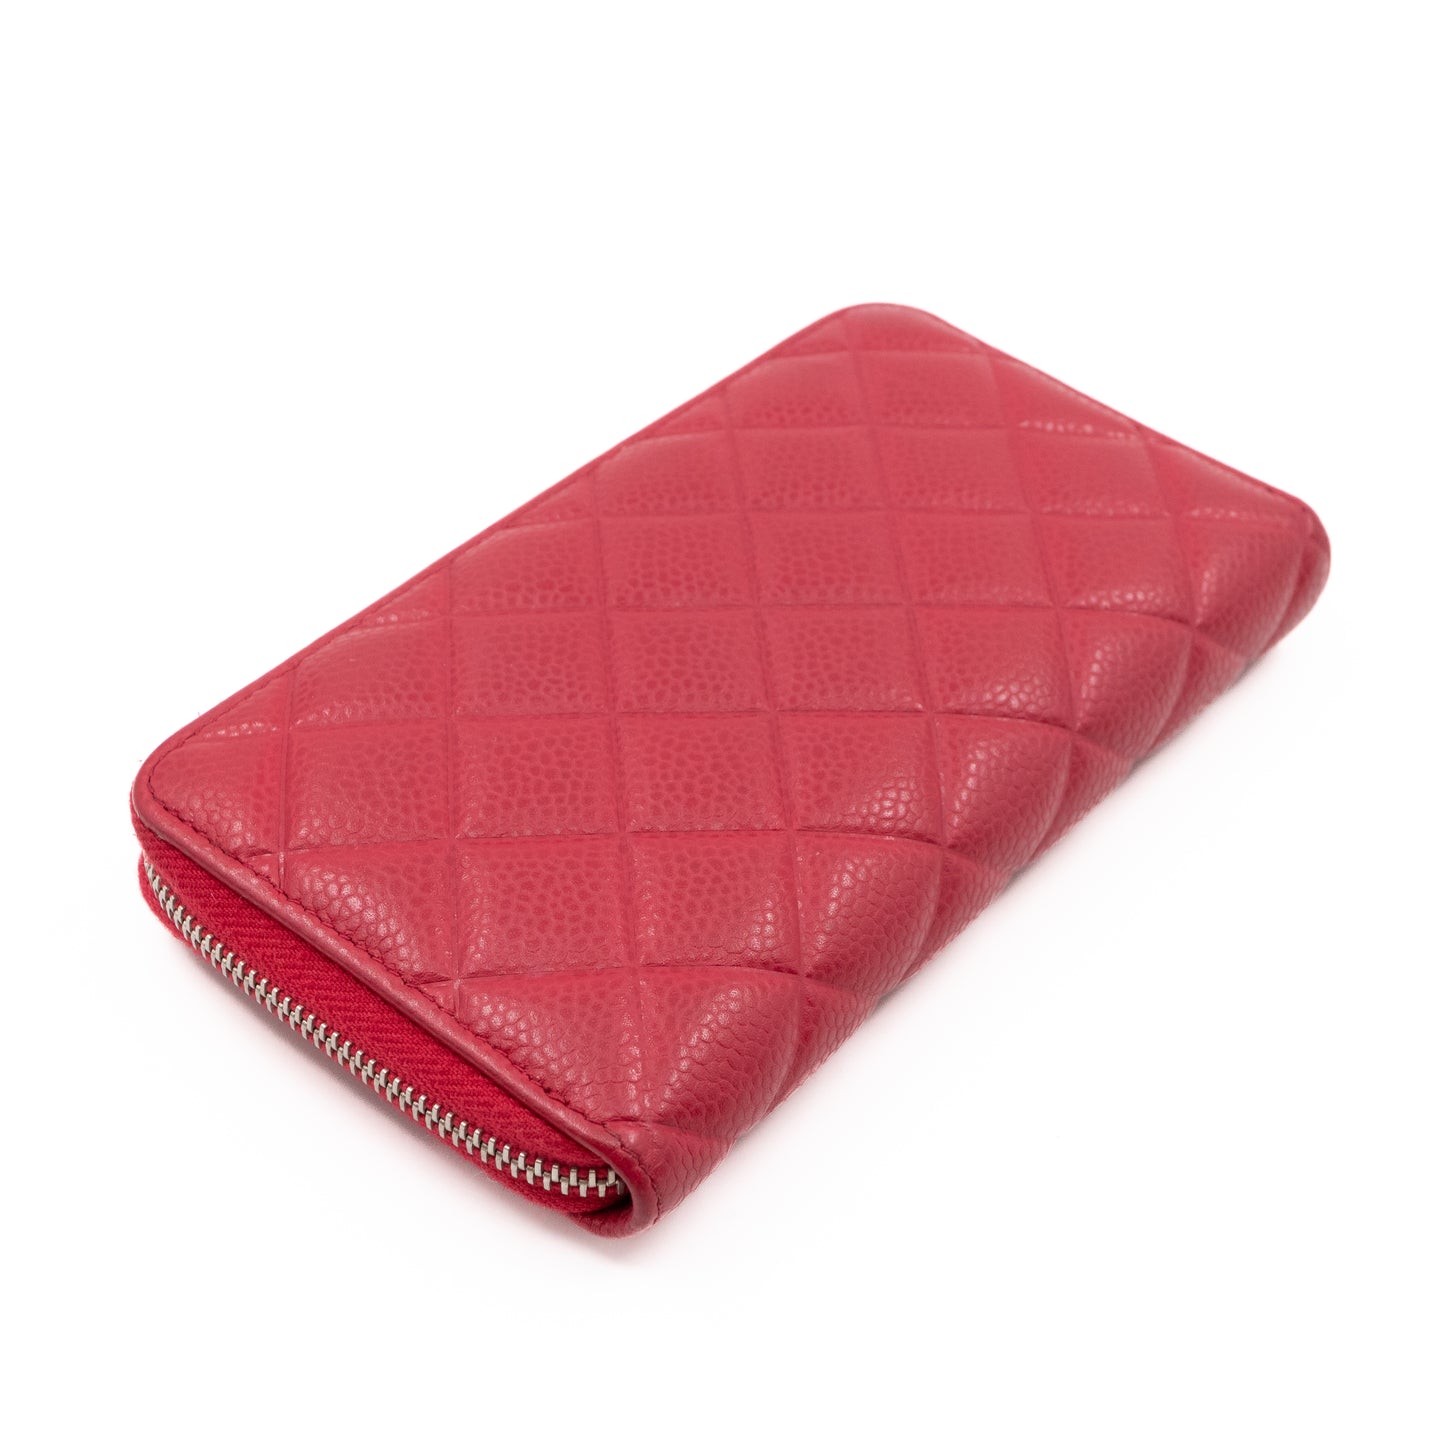 Medium Zipped Wallet Caviar Leather Red